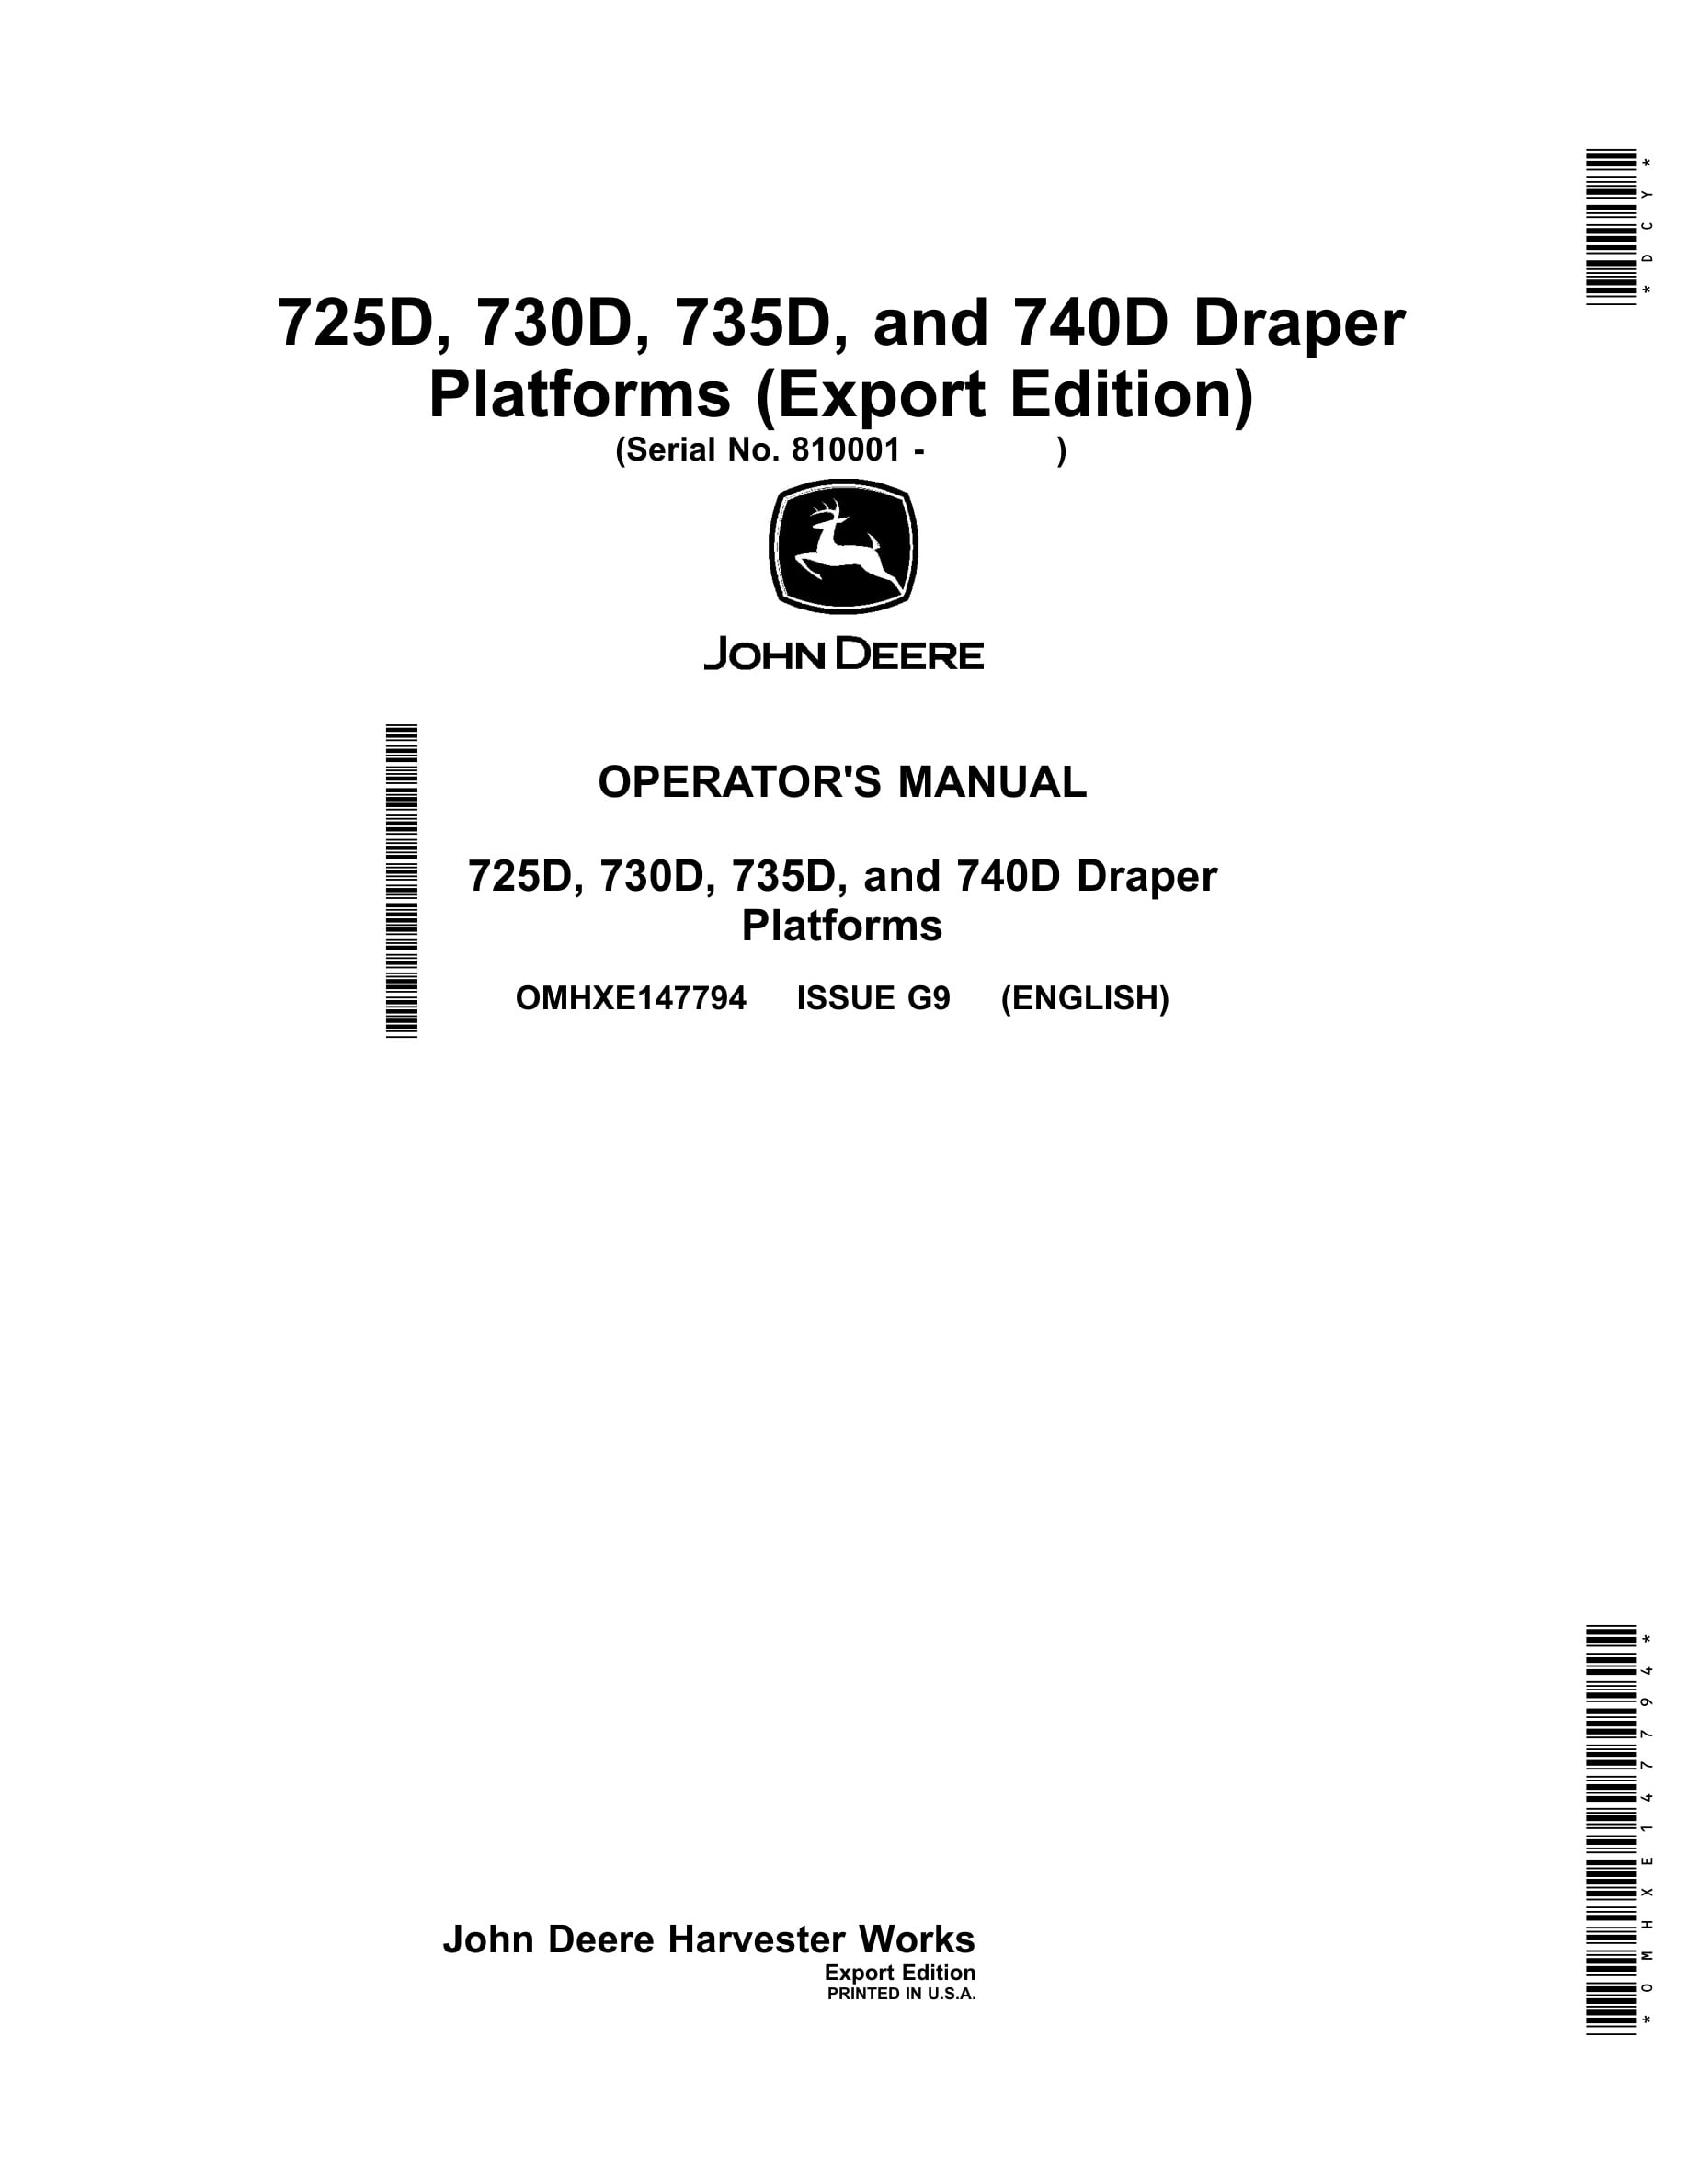 John Deere 725D, 730D, 735D, and 740D Draper Platforms Operator Manual OMHXE147794-1